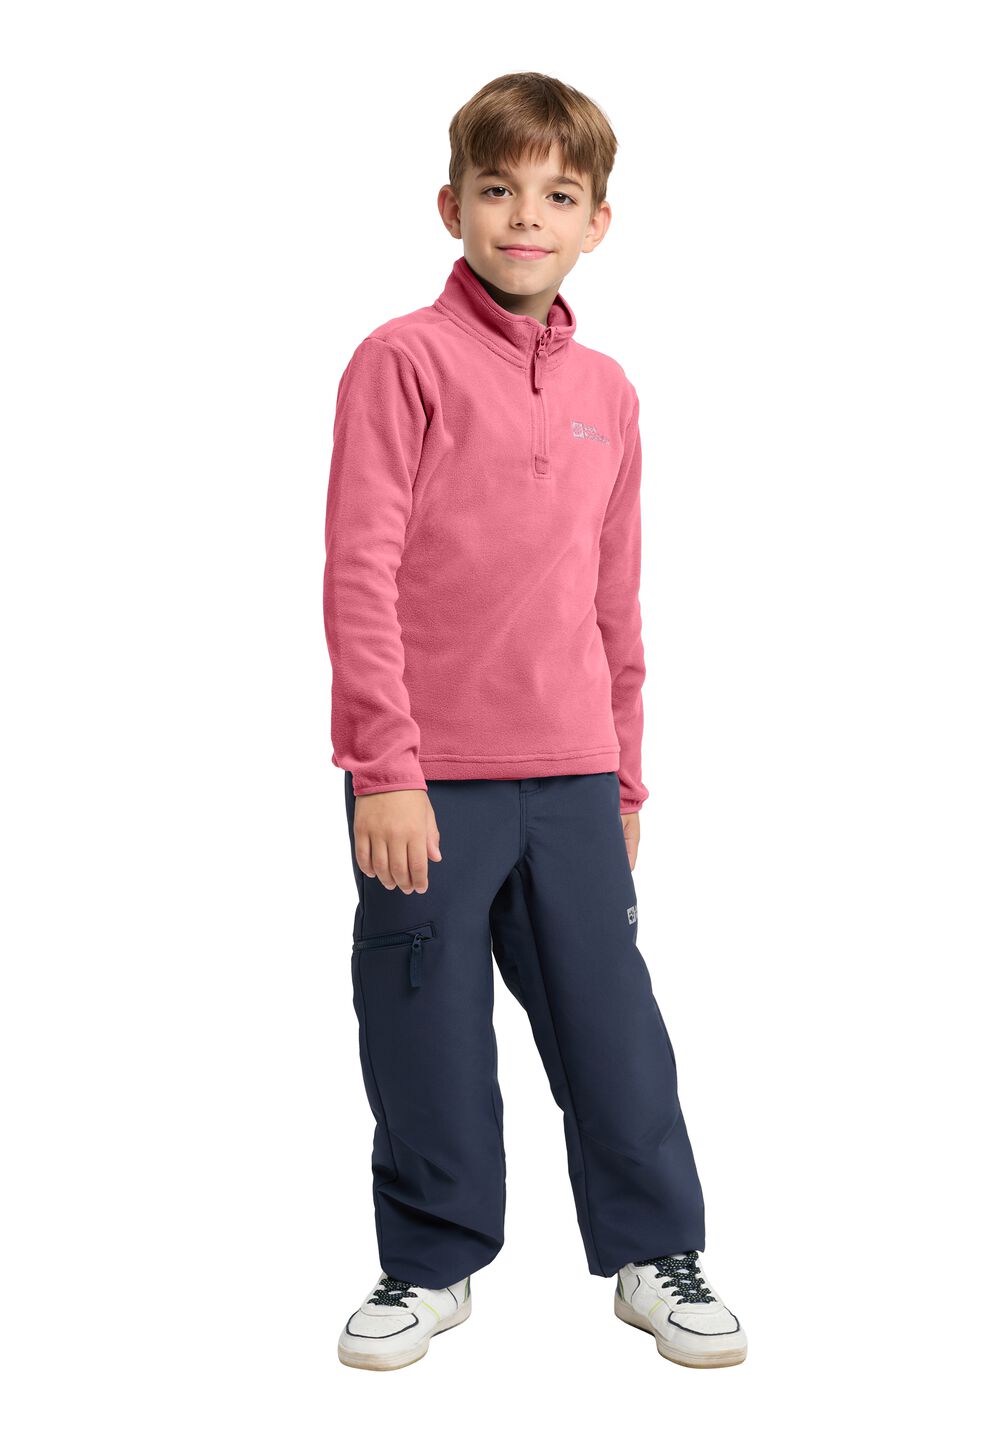 Jack Wolfskin Fleecepullover Kinder Taunus Halfzip Kids 128 soft pink soft pink von Jack Wolfskin